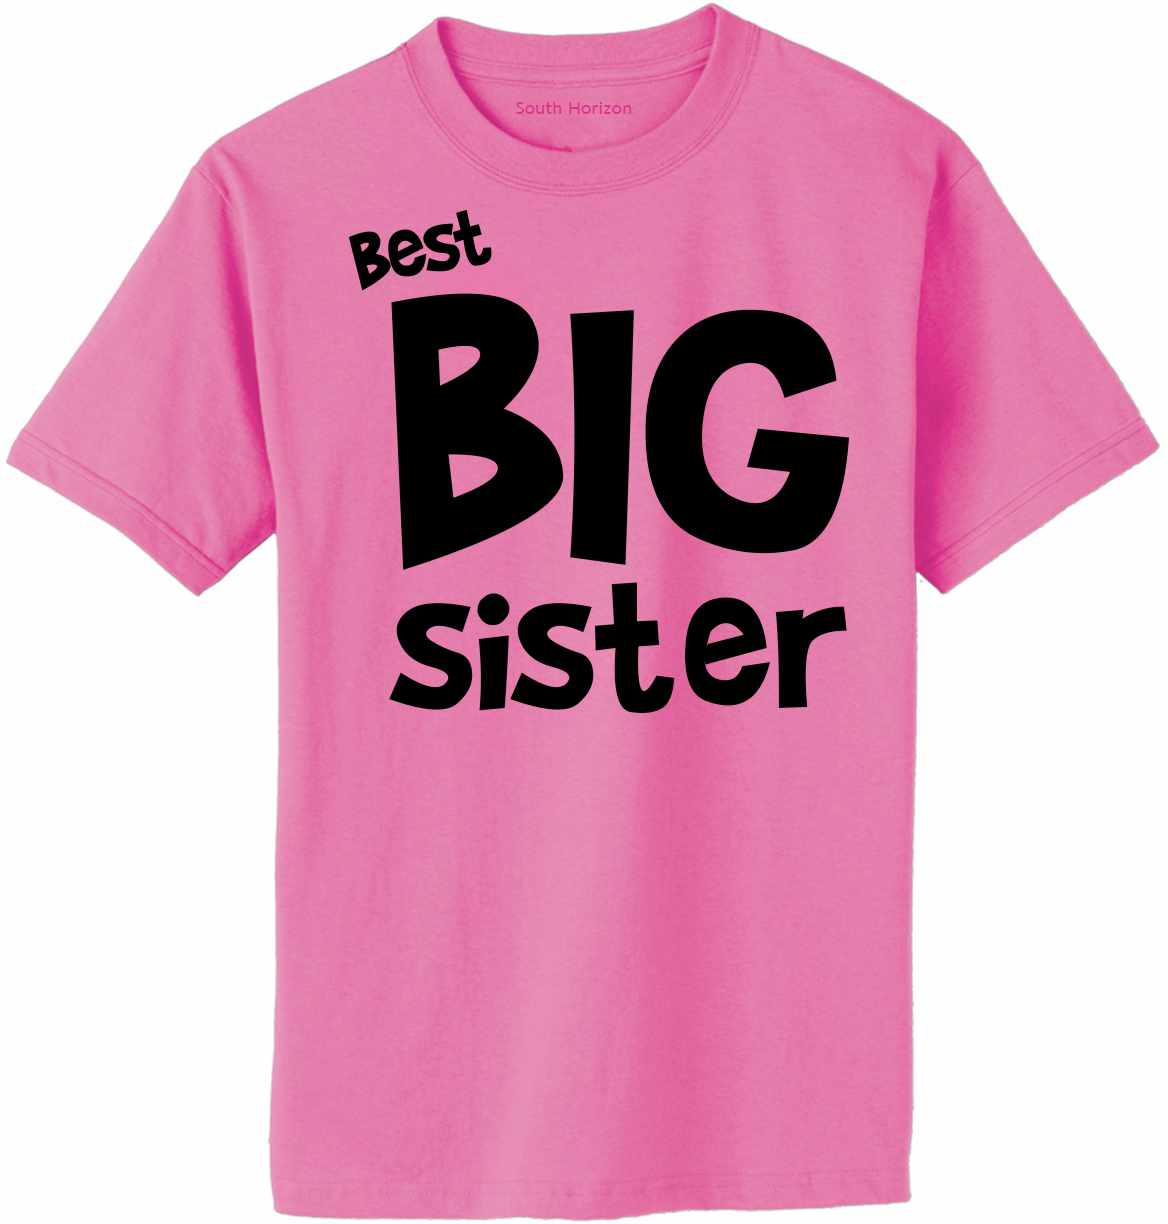 Best Big Sister Adult T-Shirt